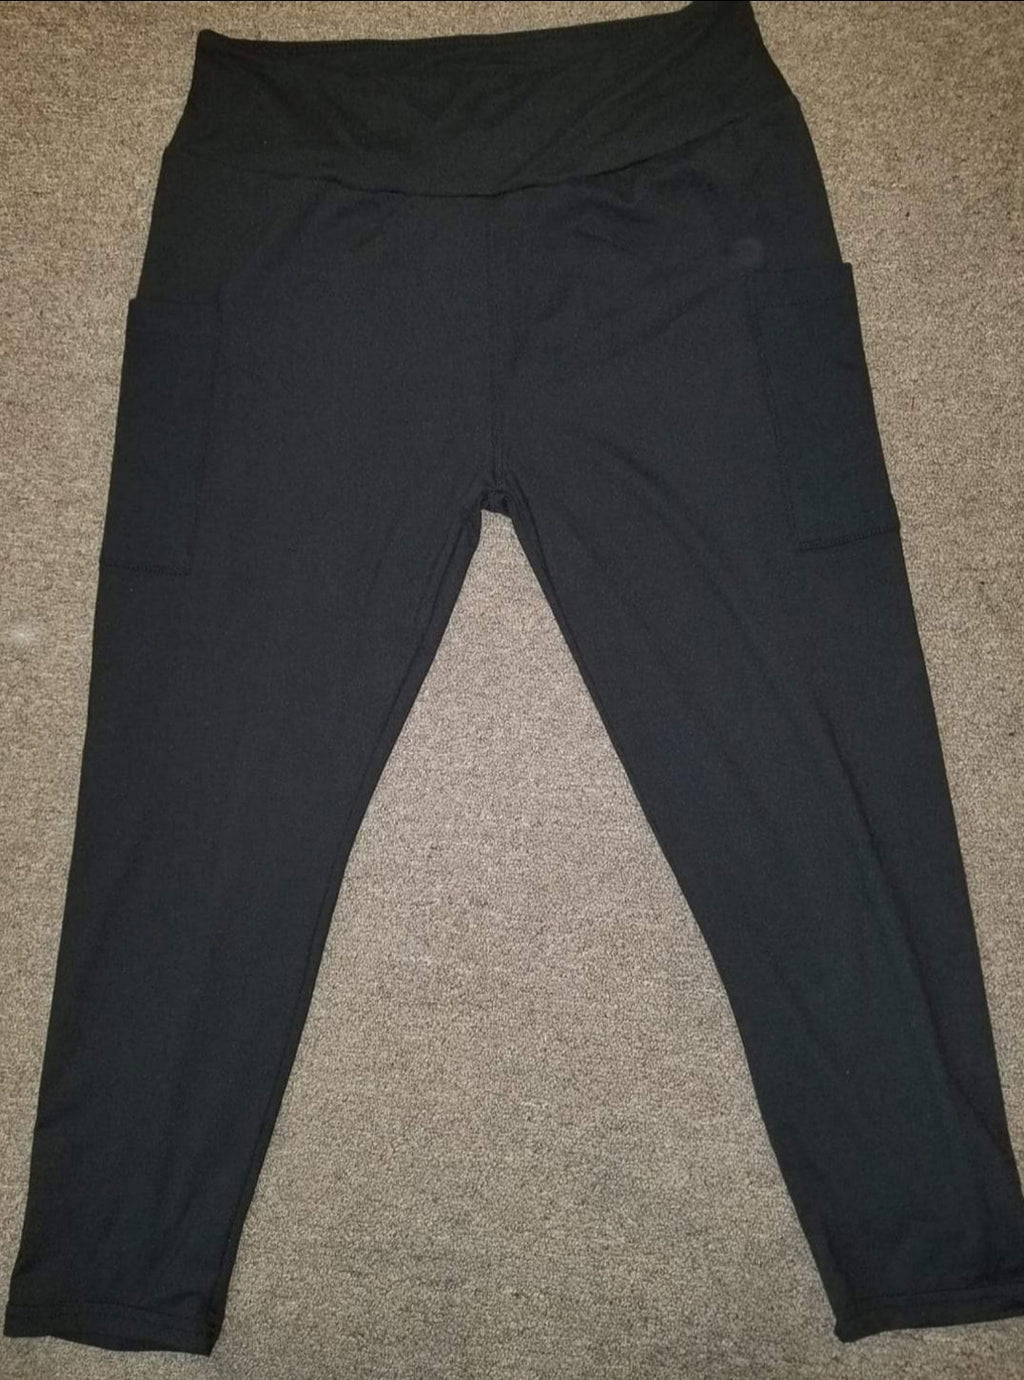 Black Capris with pockets - Smarty Pants Boutique NH